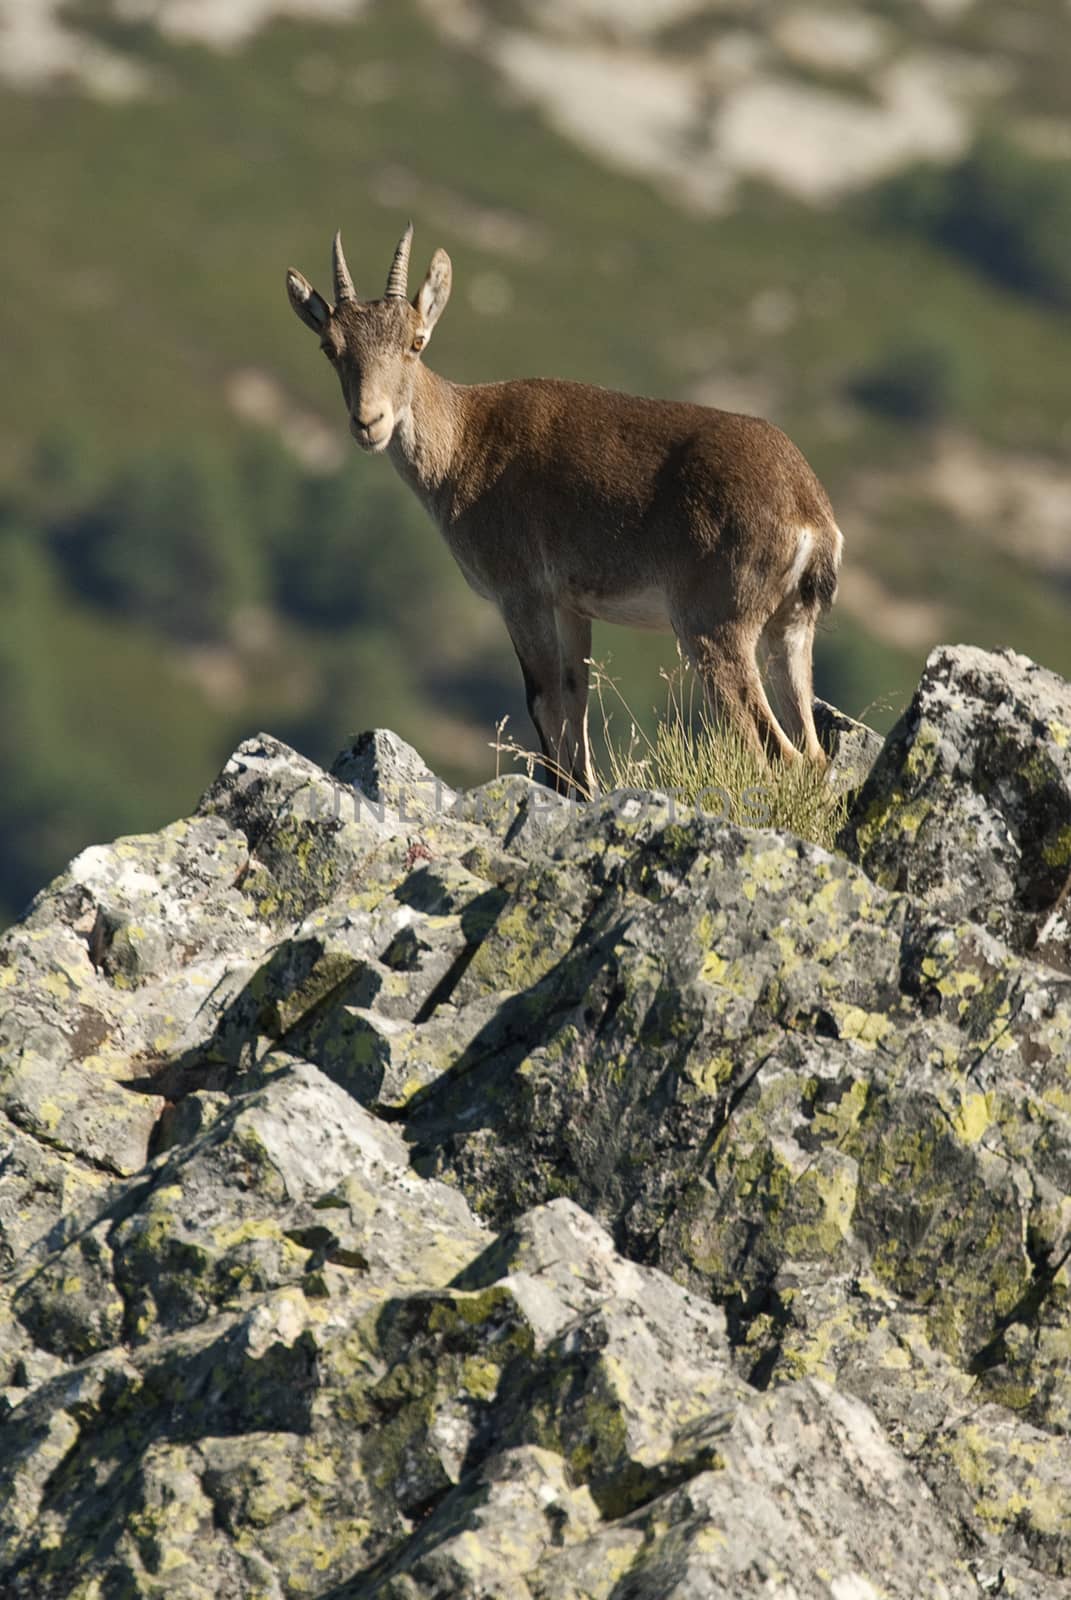 Iberian ibex, Capra pyrenaica, Iberian Ibex, Spain, on top of th by jalonsohu@gmail.com